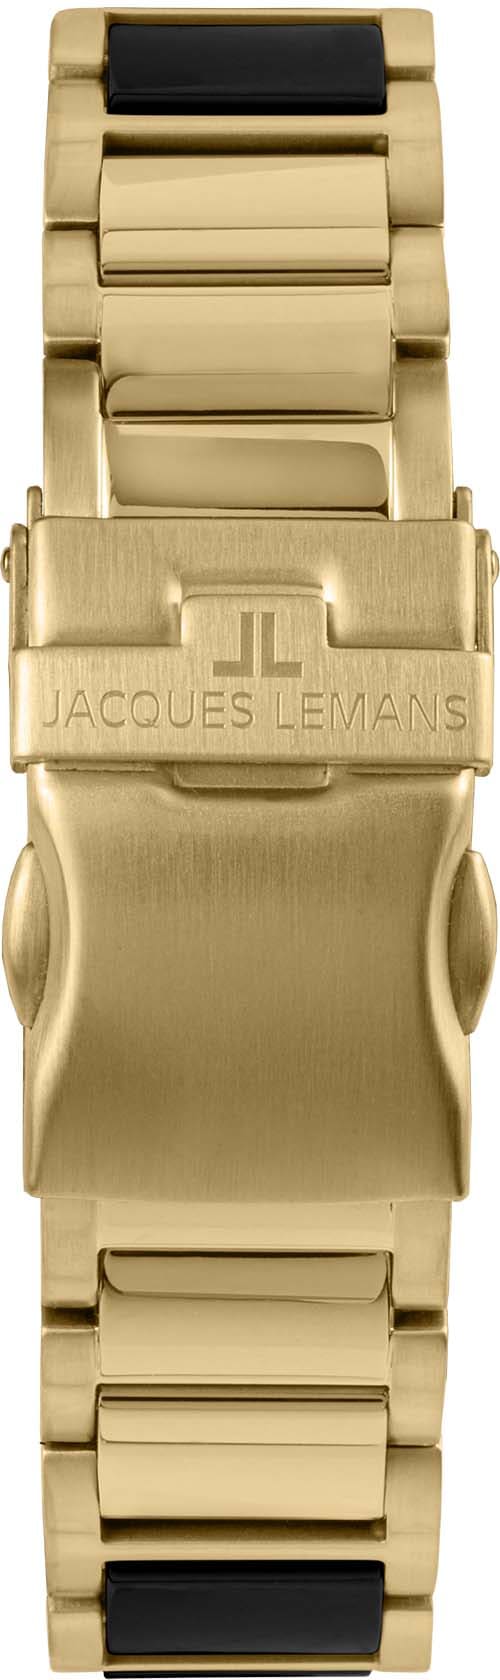 Jacques Lemans Keramikuhr »Liverpool, 42-12G«, Quarzuhr, Armbanduhr, Damenuhr, Datum, Leuchtzeiger